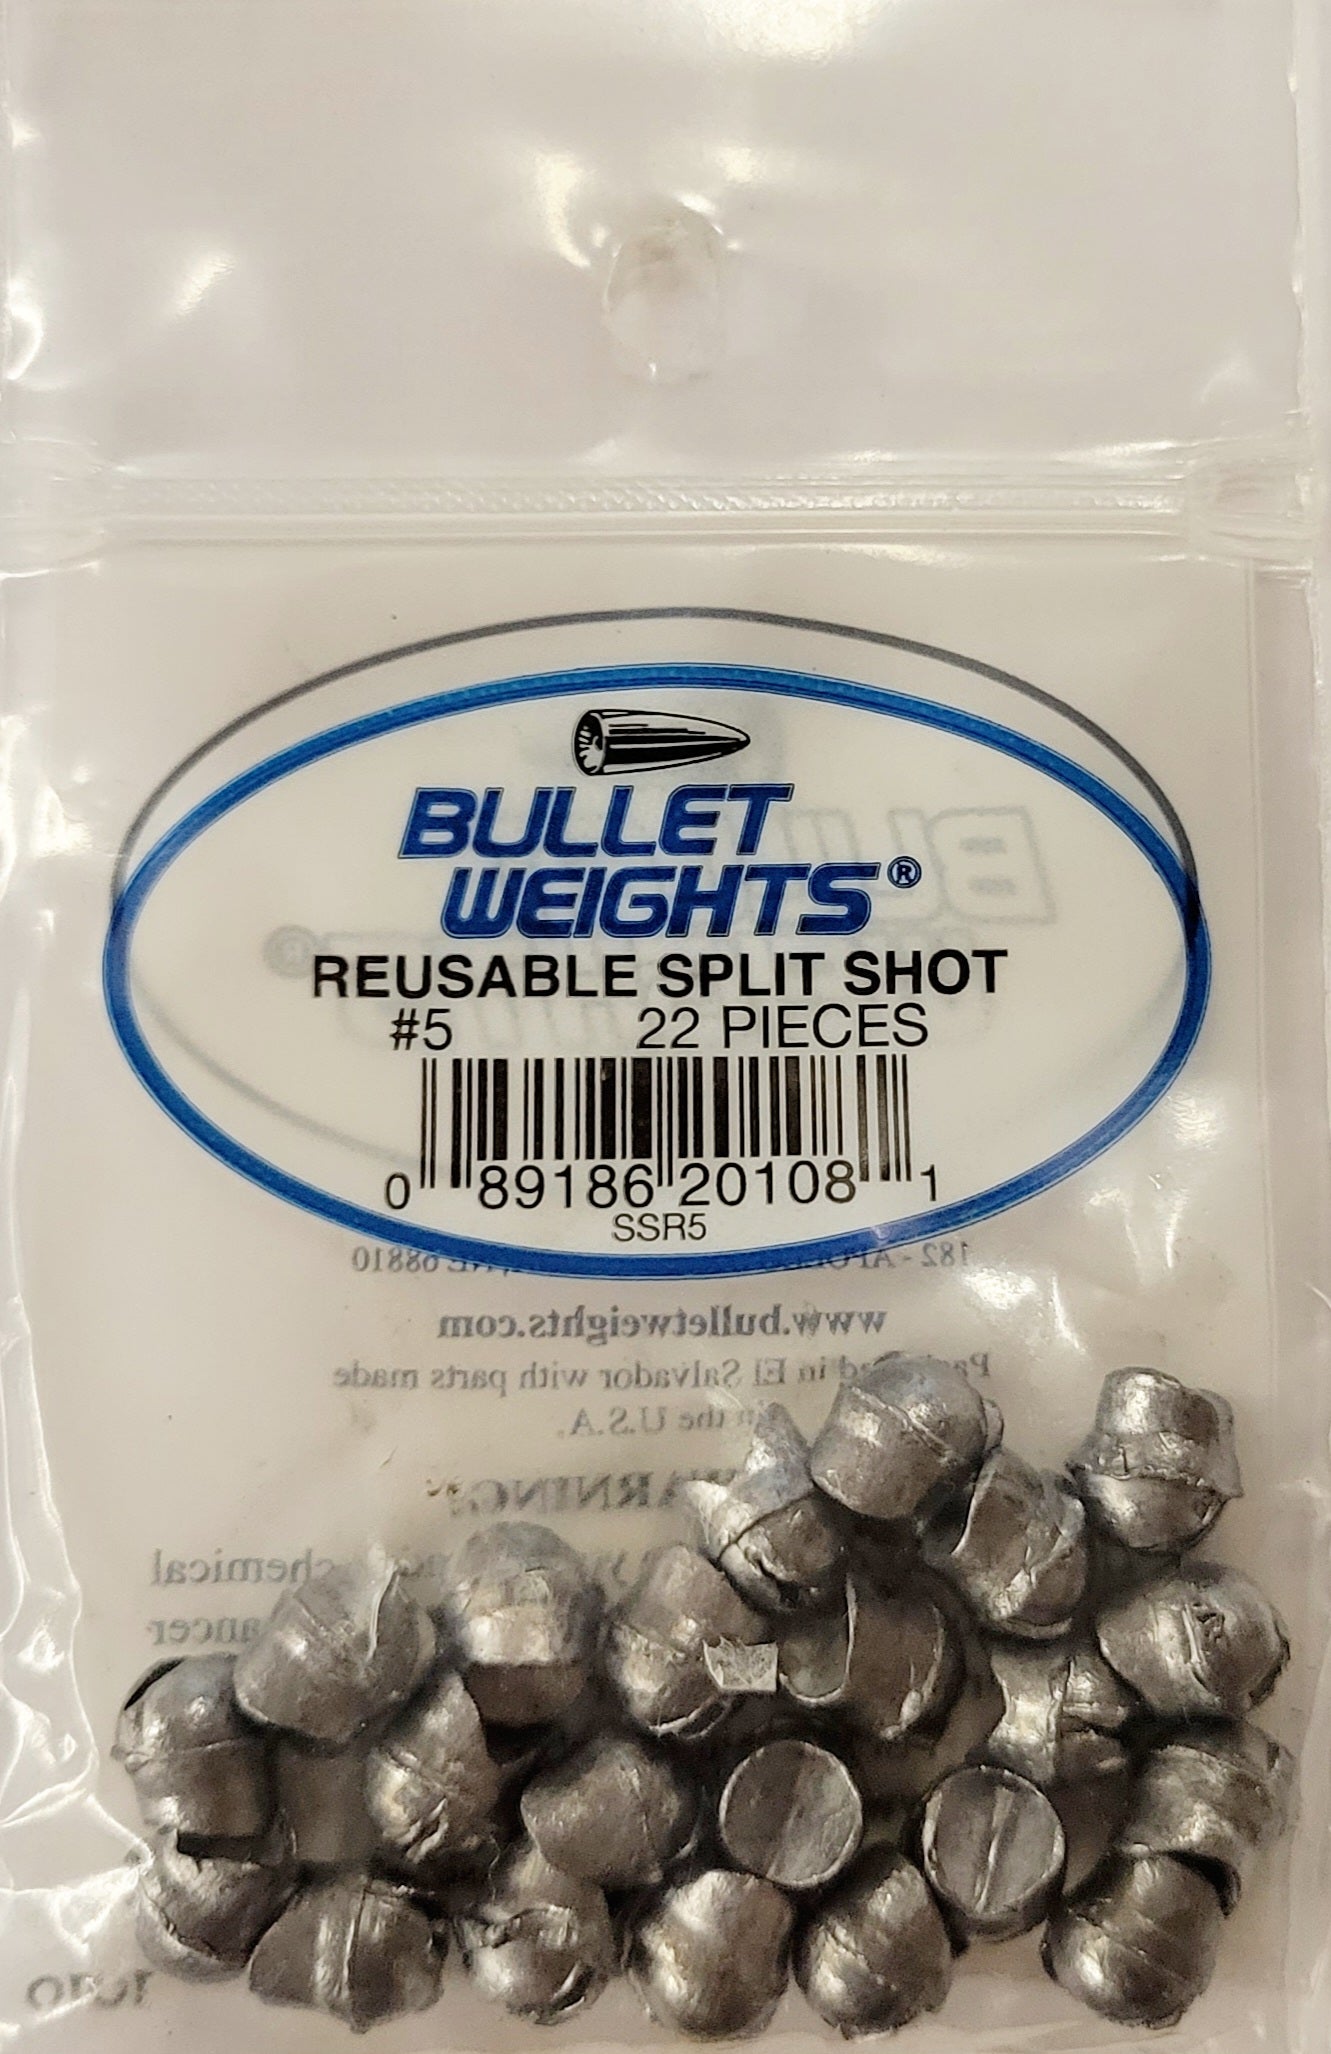 BULLET WEIGHTS REUSABLE SPLIT SHOT